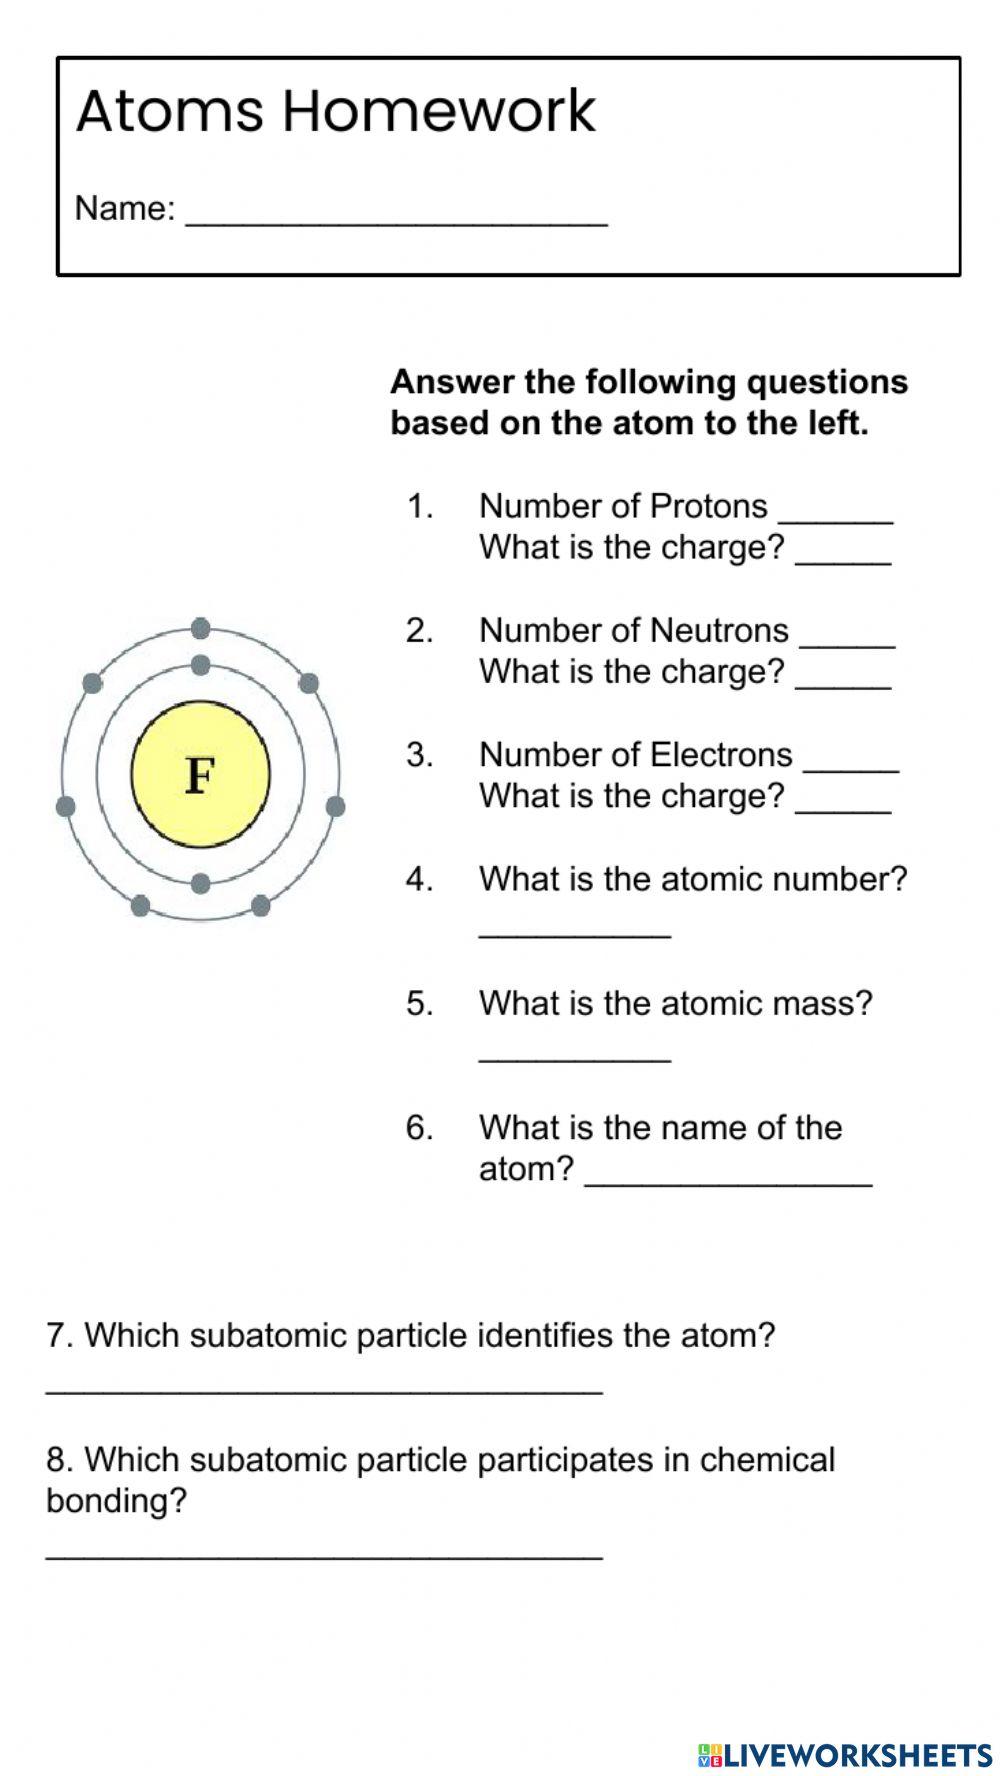 Atoms Homework